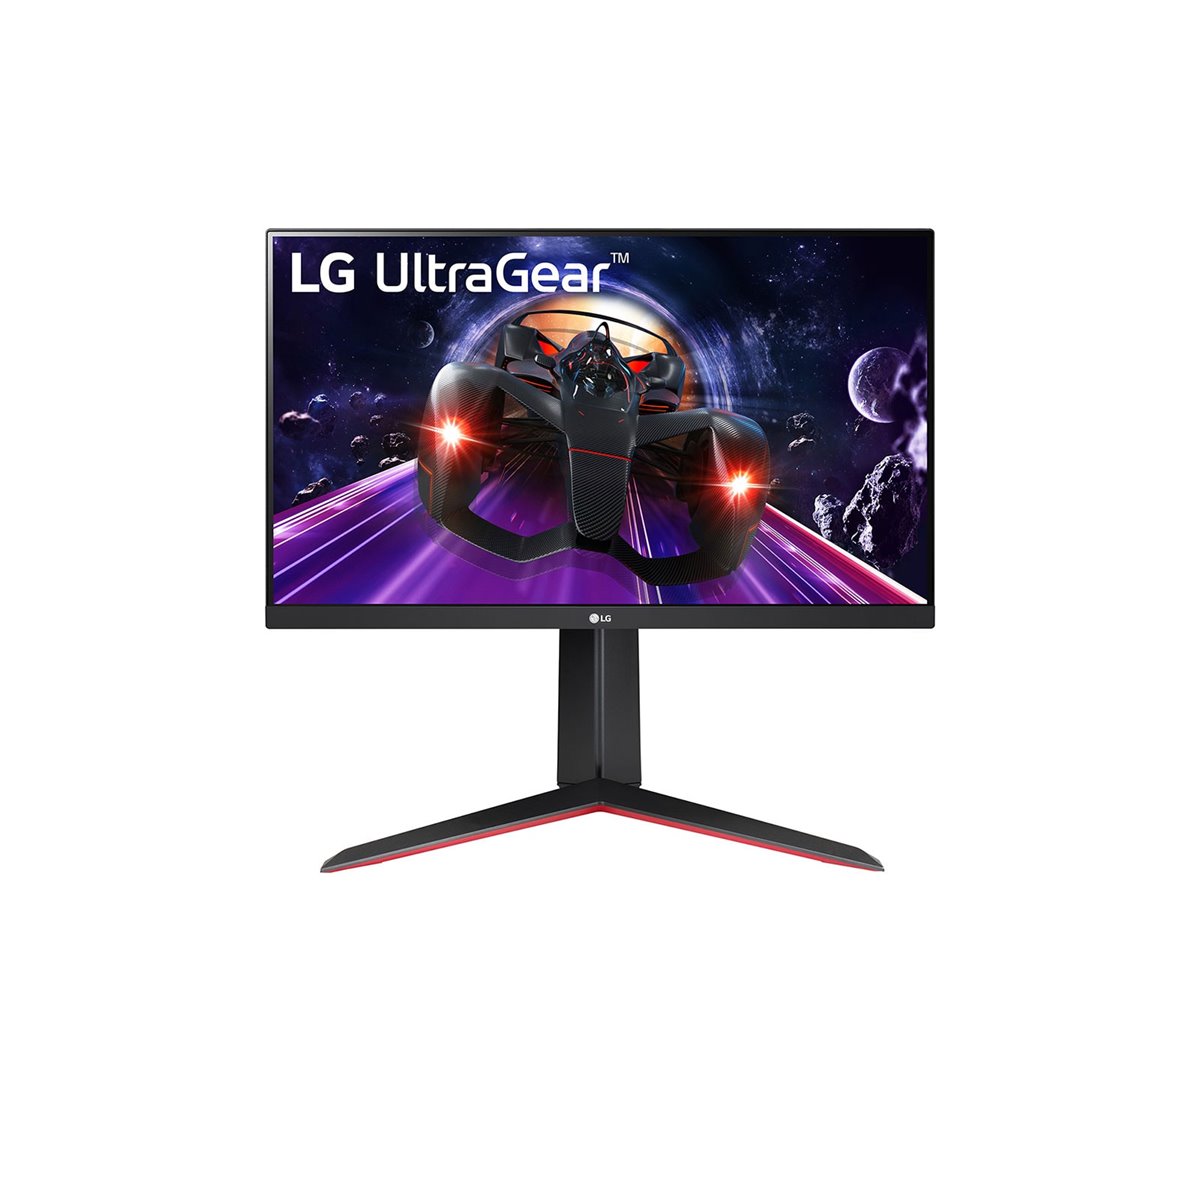 LG UltraGear 24GN65R-B - LED-Monitor - Gaming - 61 cm (24) (23.8 sichtbar) - 1920 x 1080 Full HD (1080p) @ 144 Hz - IPS - 300 cd